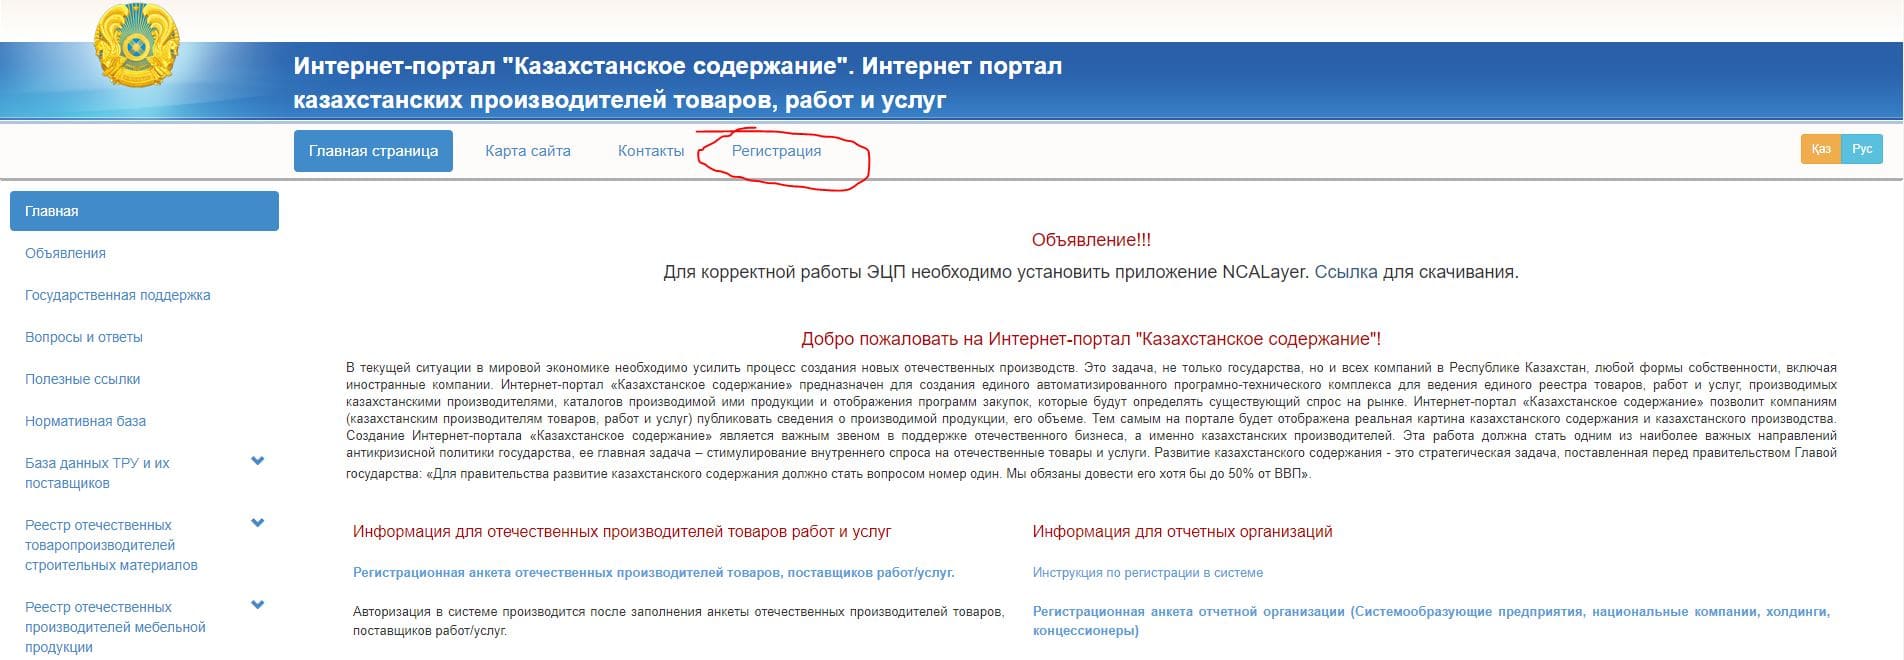 Интернет-портал "Казахстаныыыы капуш"